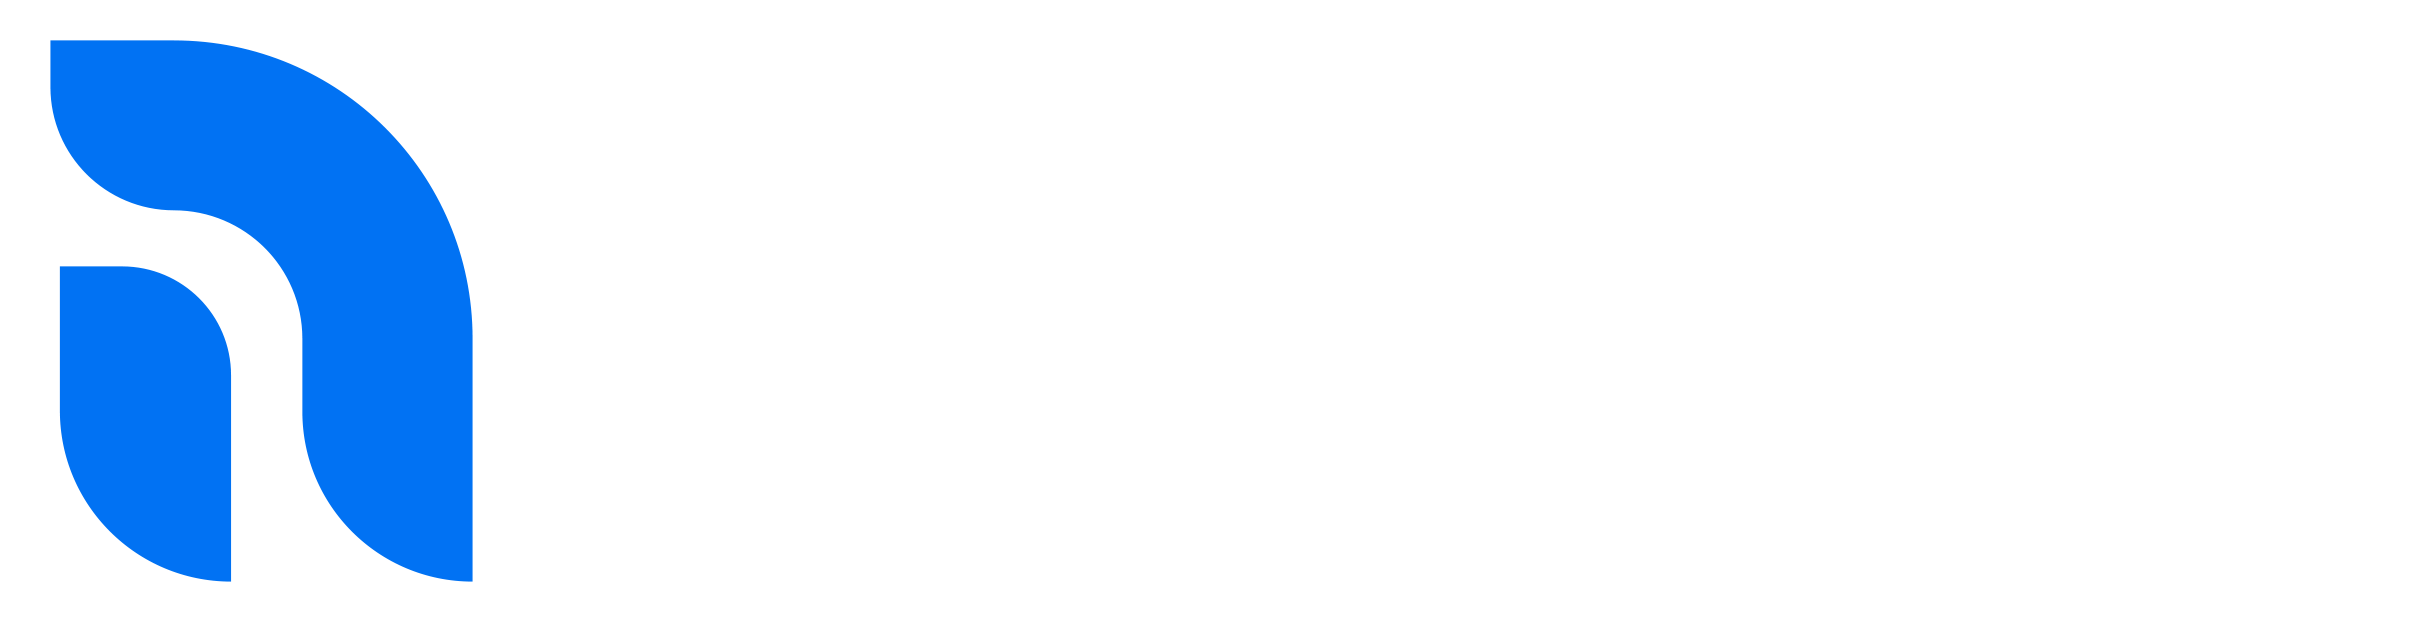 Rabboni Chemical